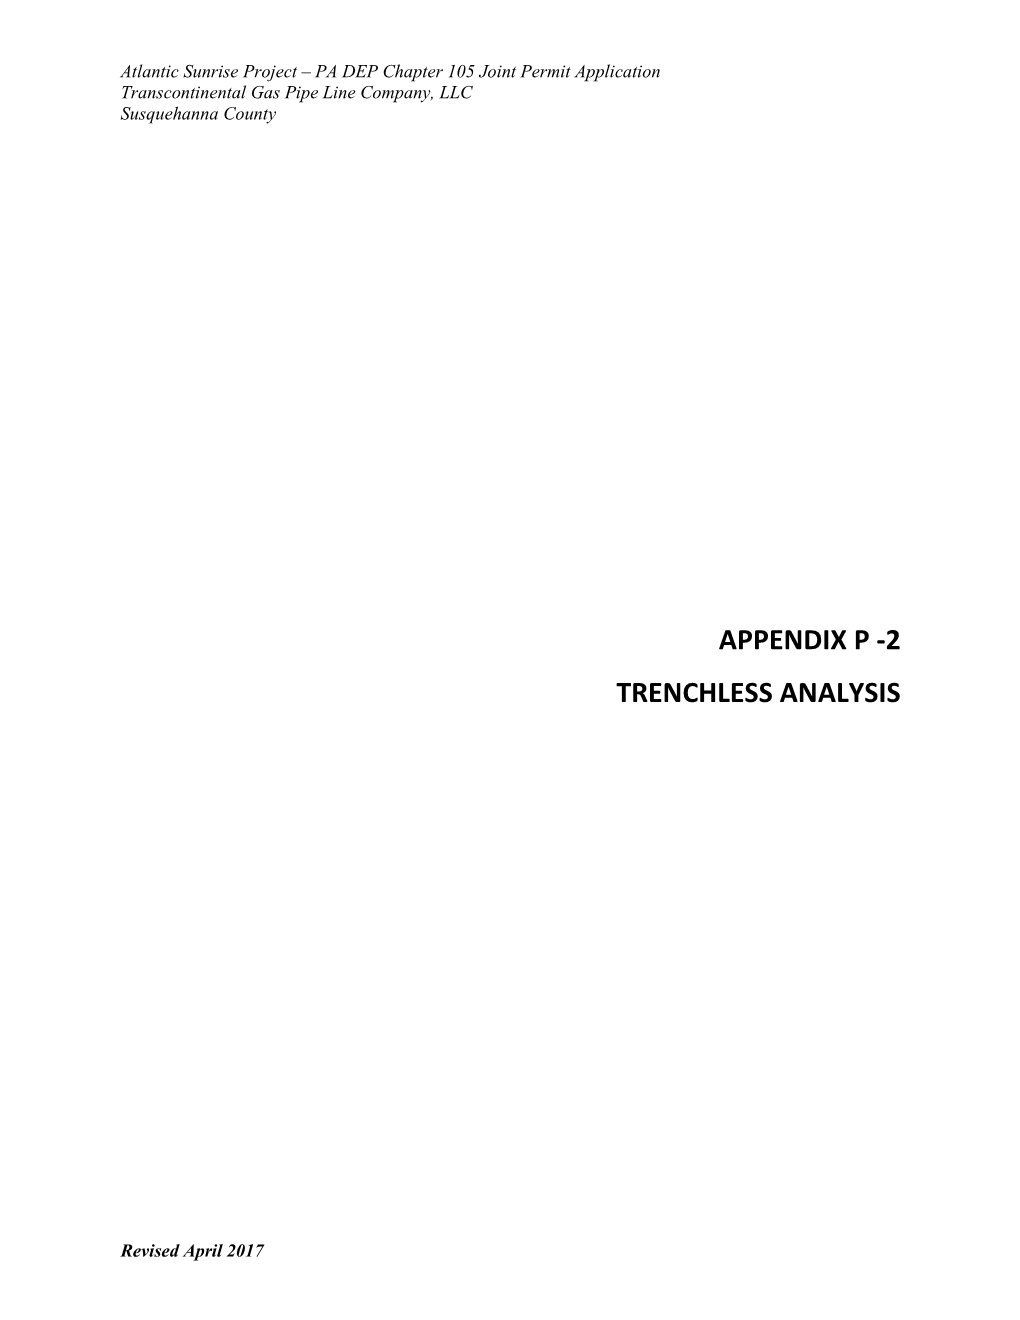 Appendix P -2 Trenchless Analysis